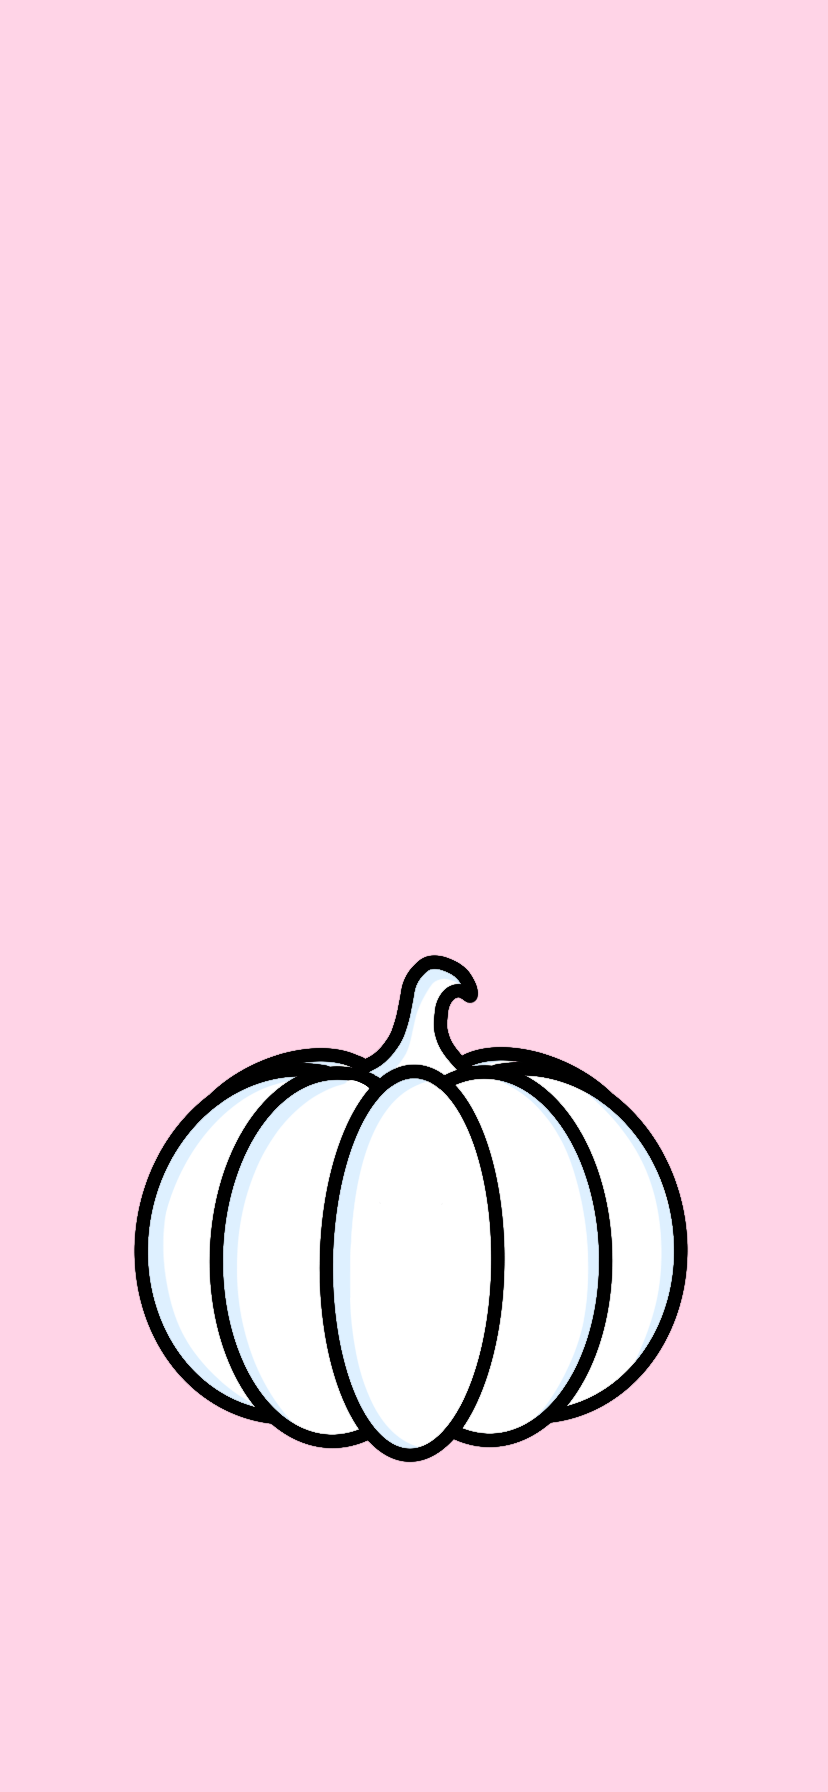 A pumpkin on the wall - Halloween